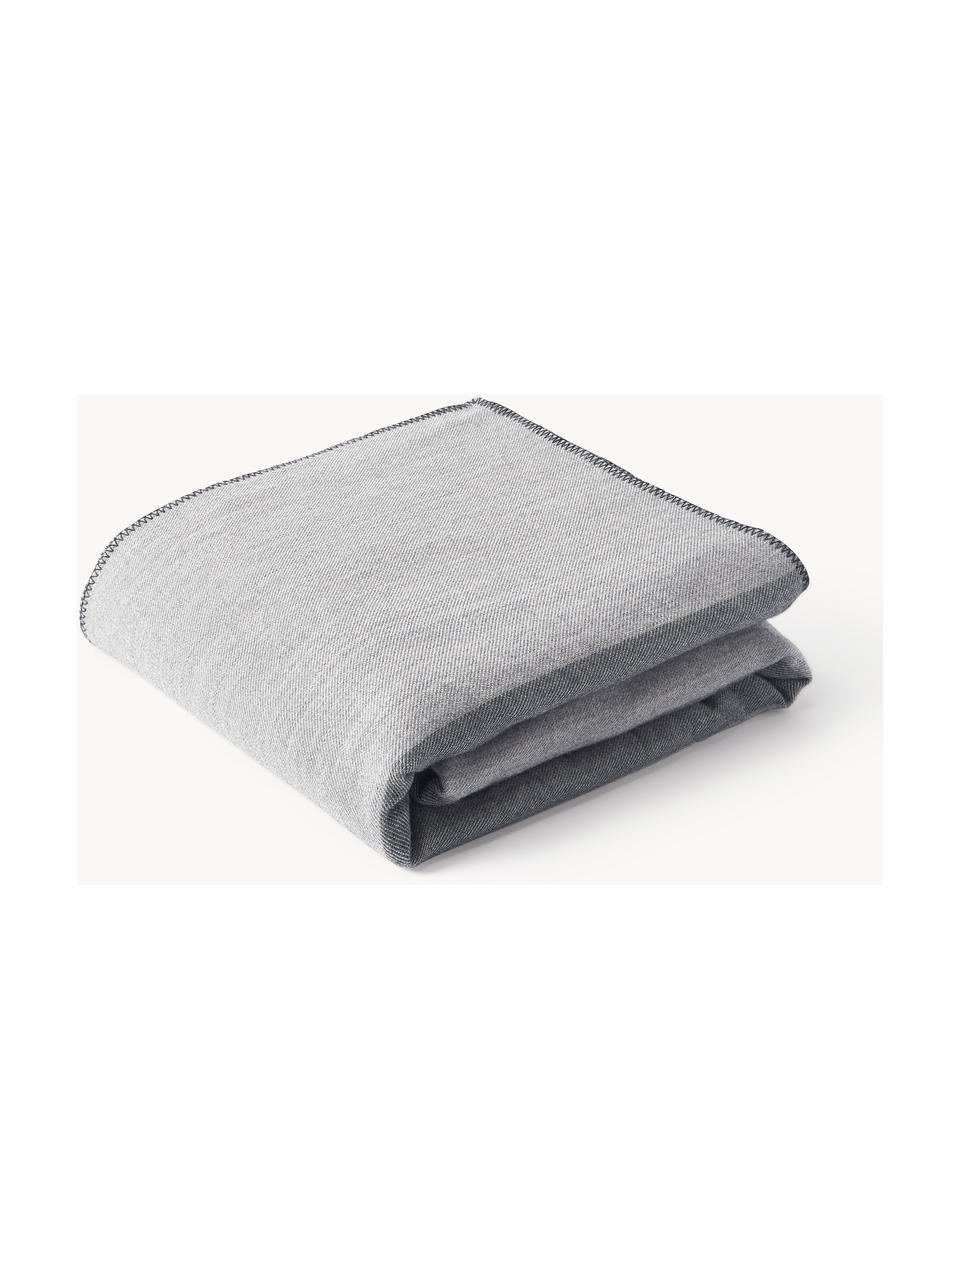 Colcha de lana a rayas Marfil, Tonos grises, An 230 x L 250 (para camas de 180 x 200 cm)